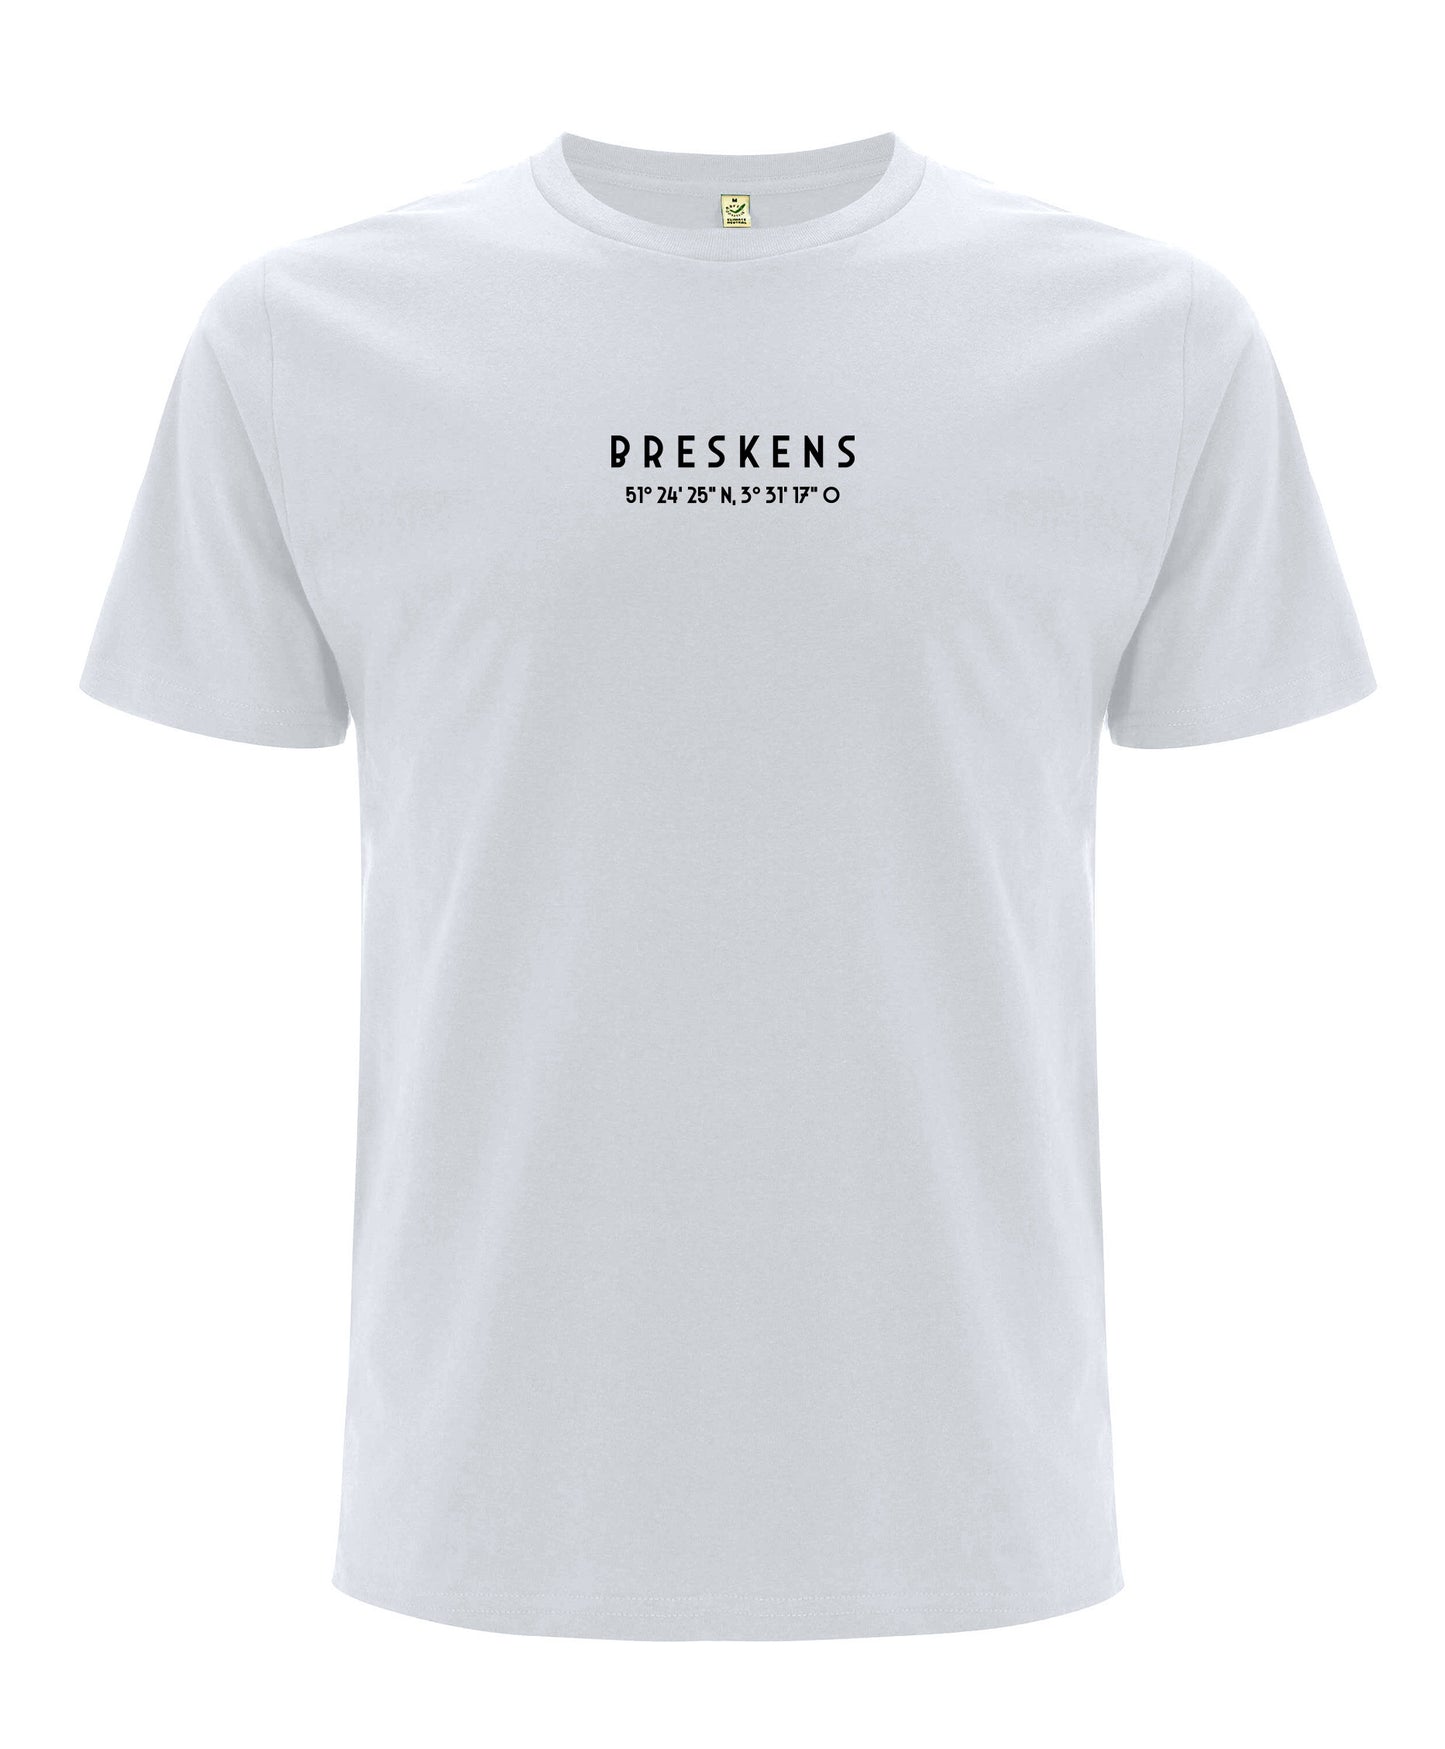 T-Shirt unisex | Breskens Simple